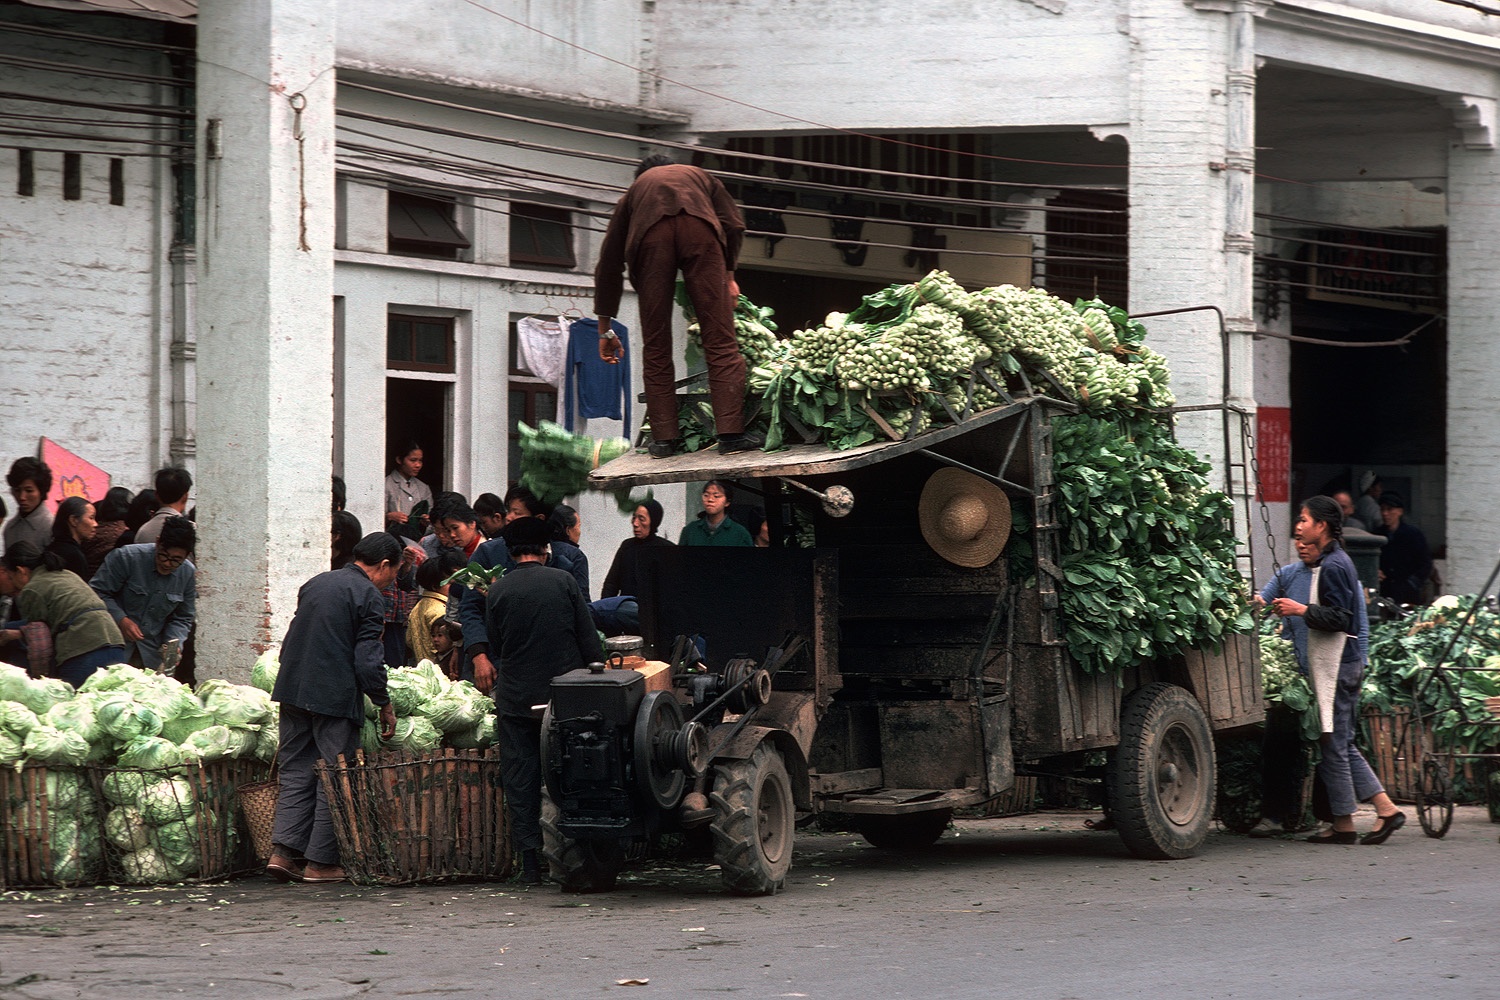 bill-hocker-street-market-guangdong-china-1979